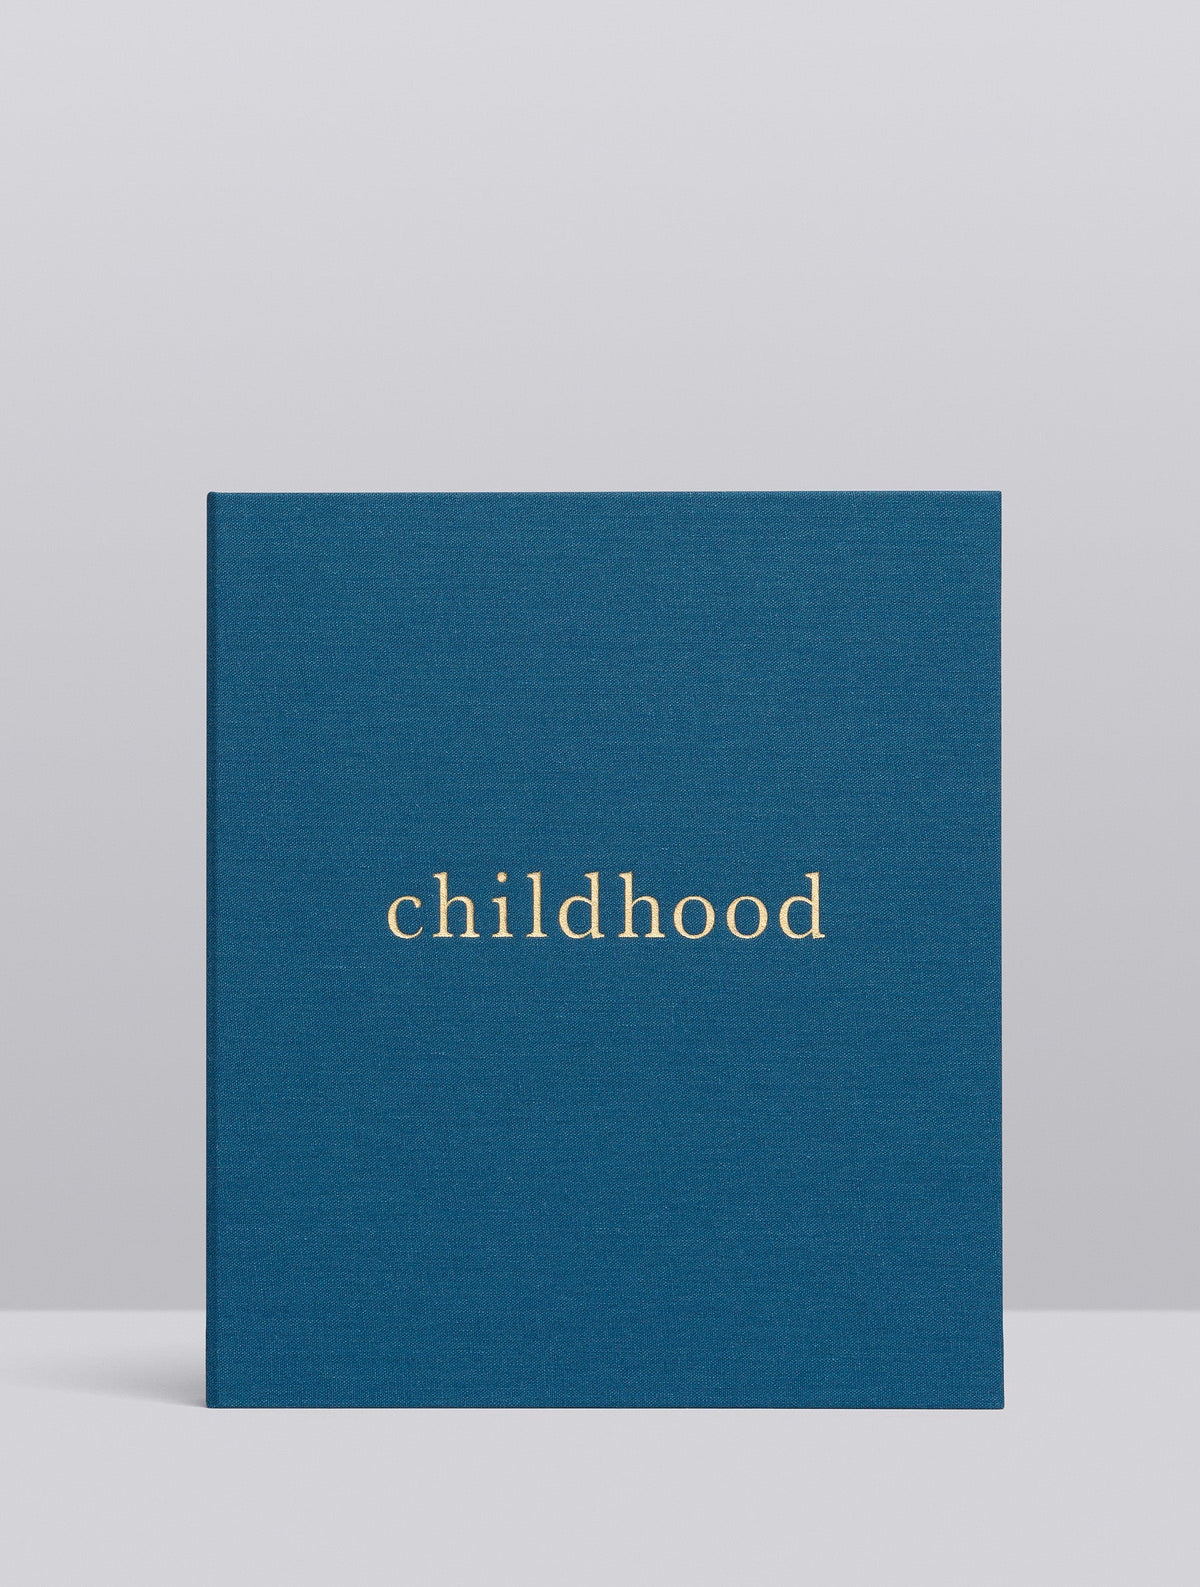 Childhood Memories Bundle. Blue